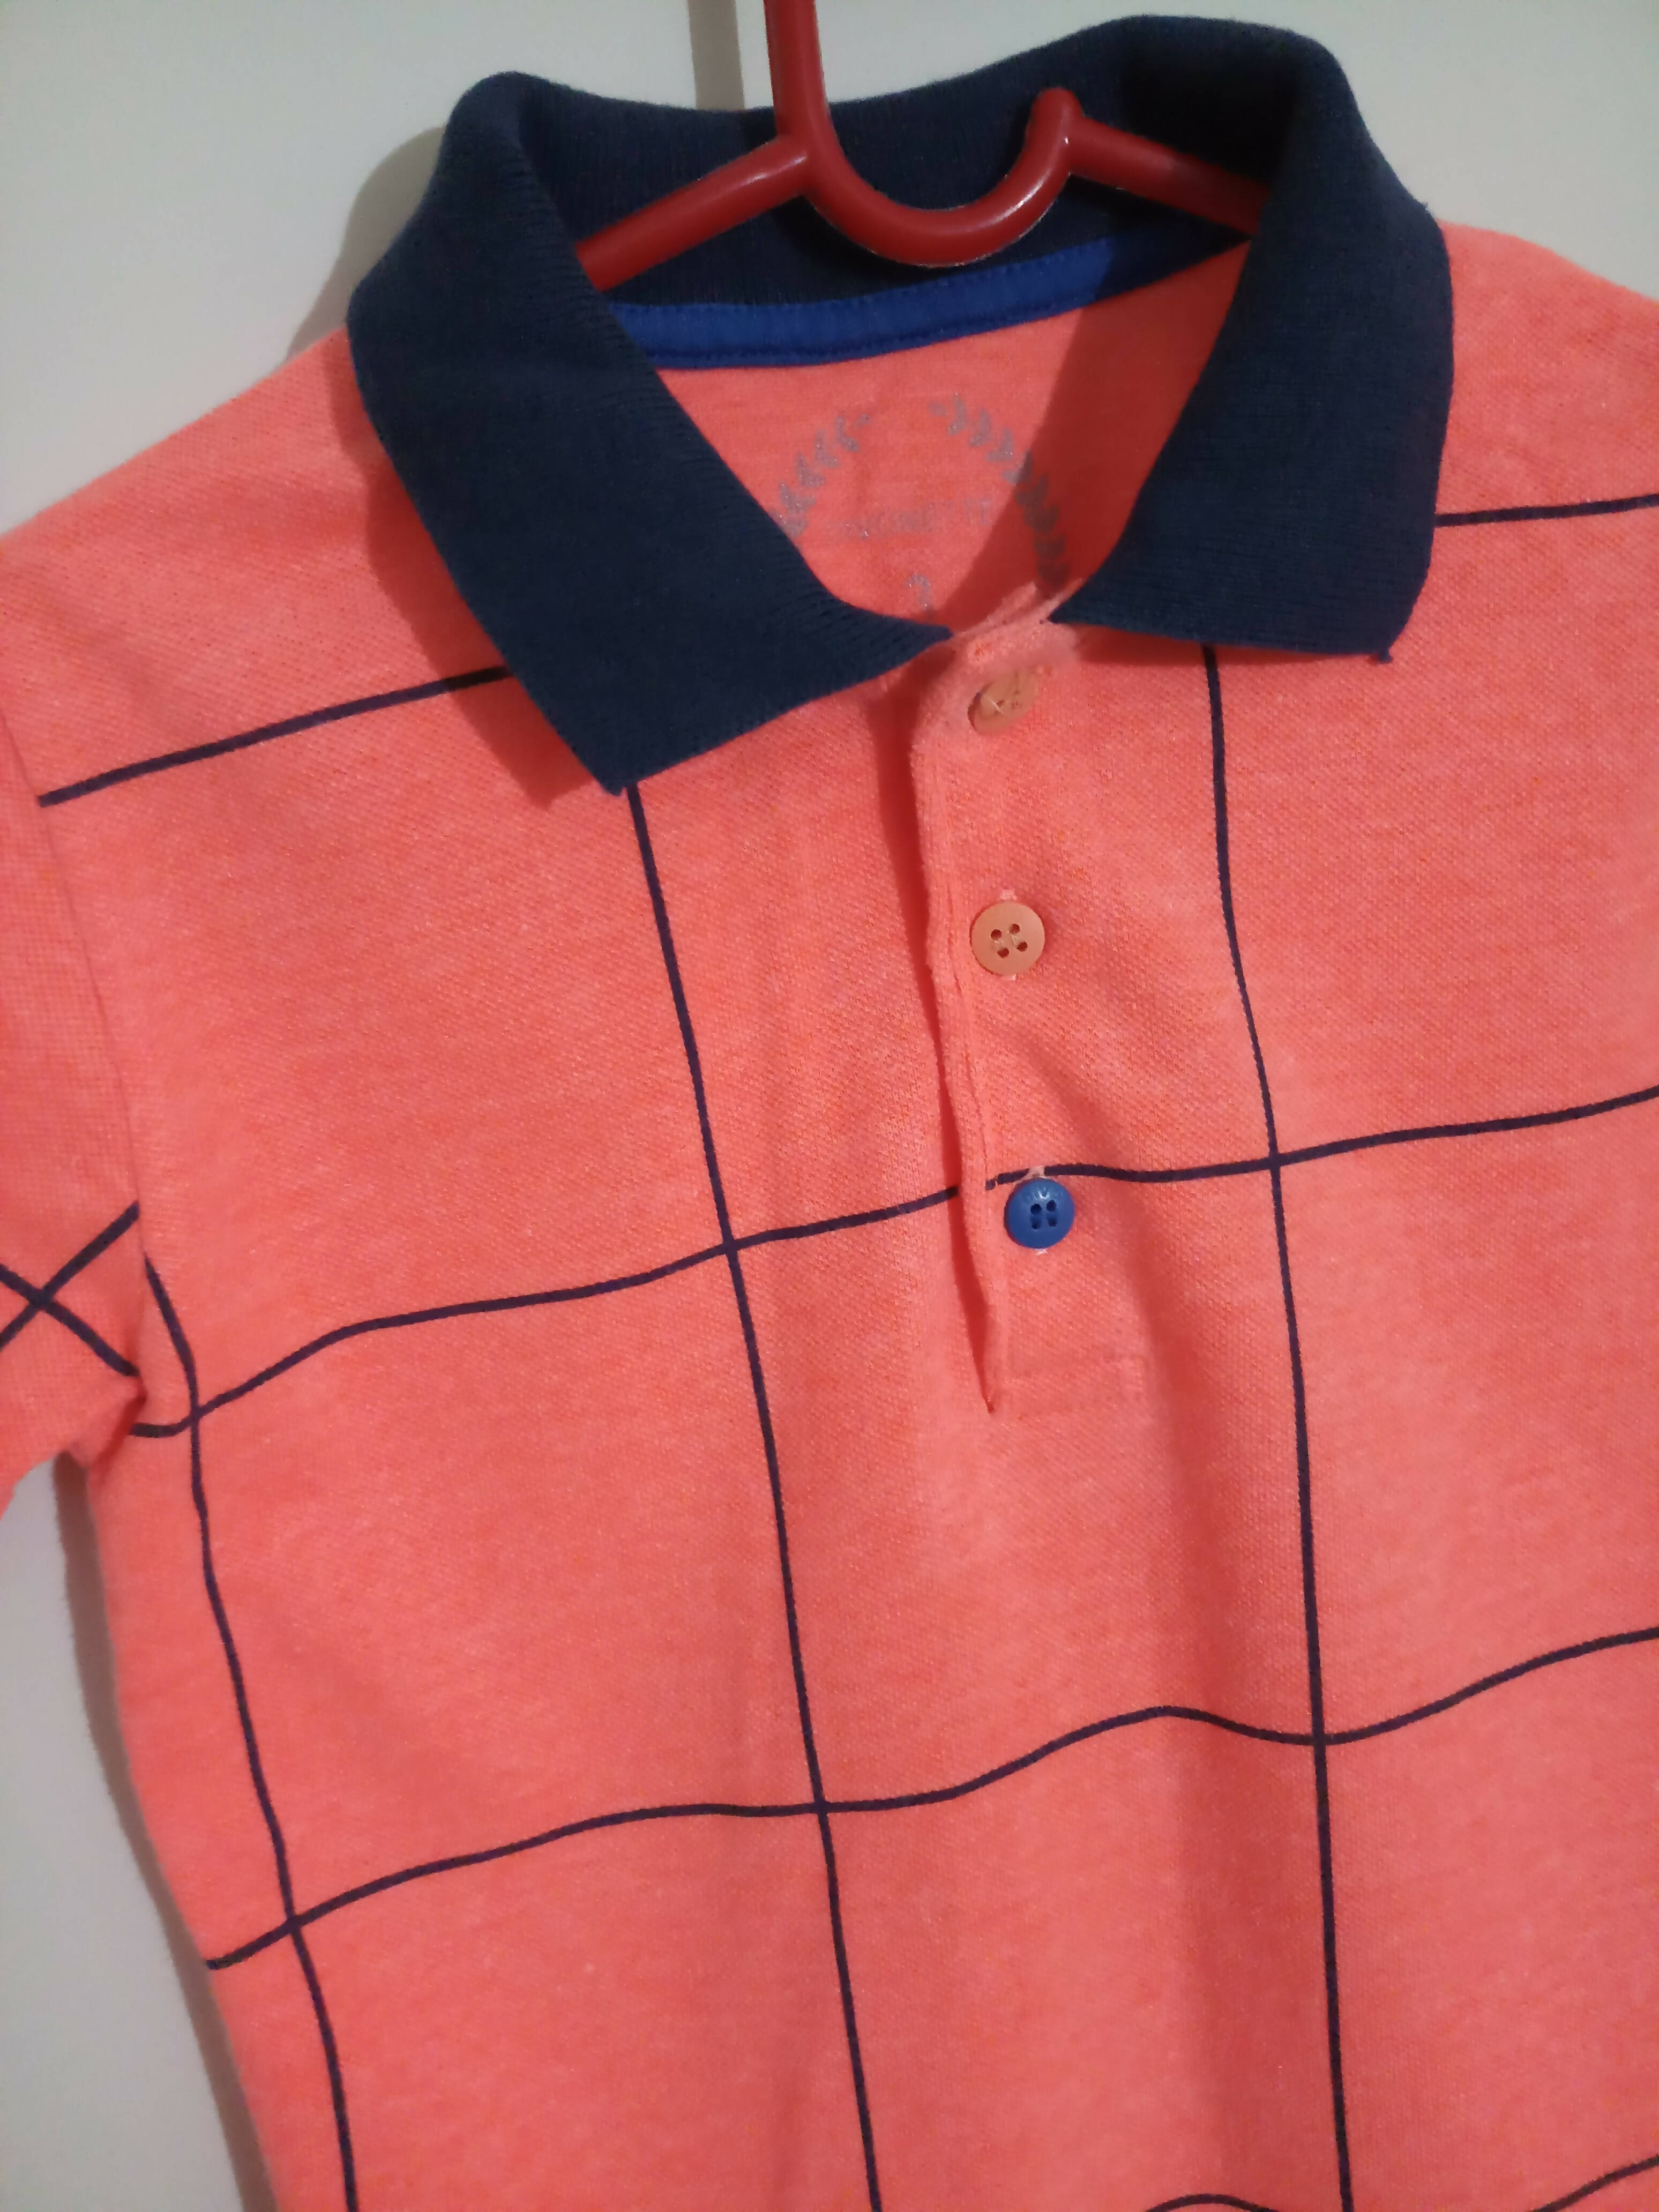 Babies World Orange Polo Shirt | Kids Tops & Shirts | Worn Once